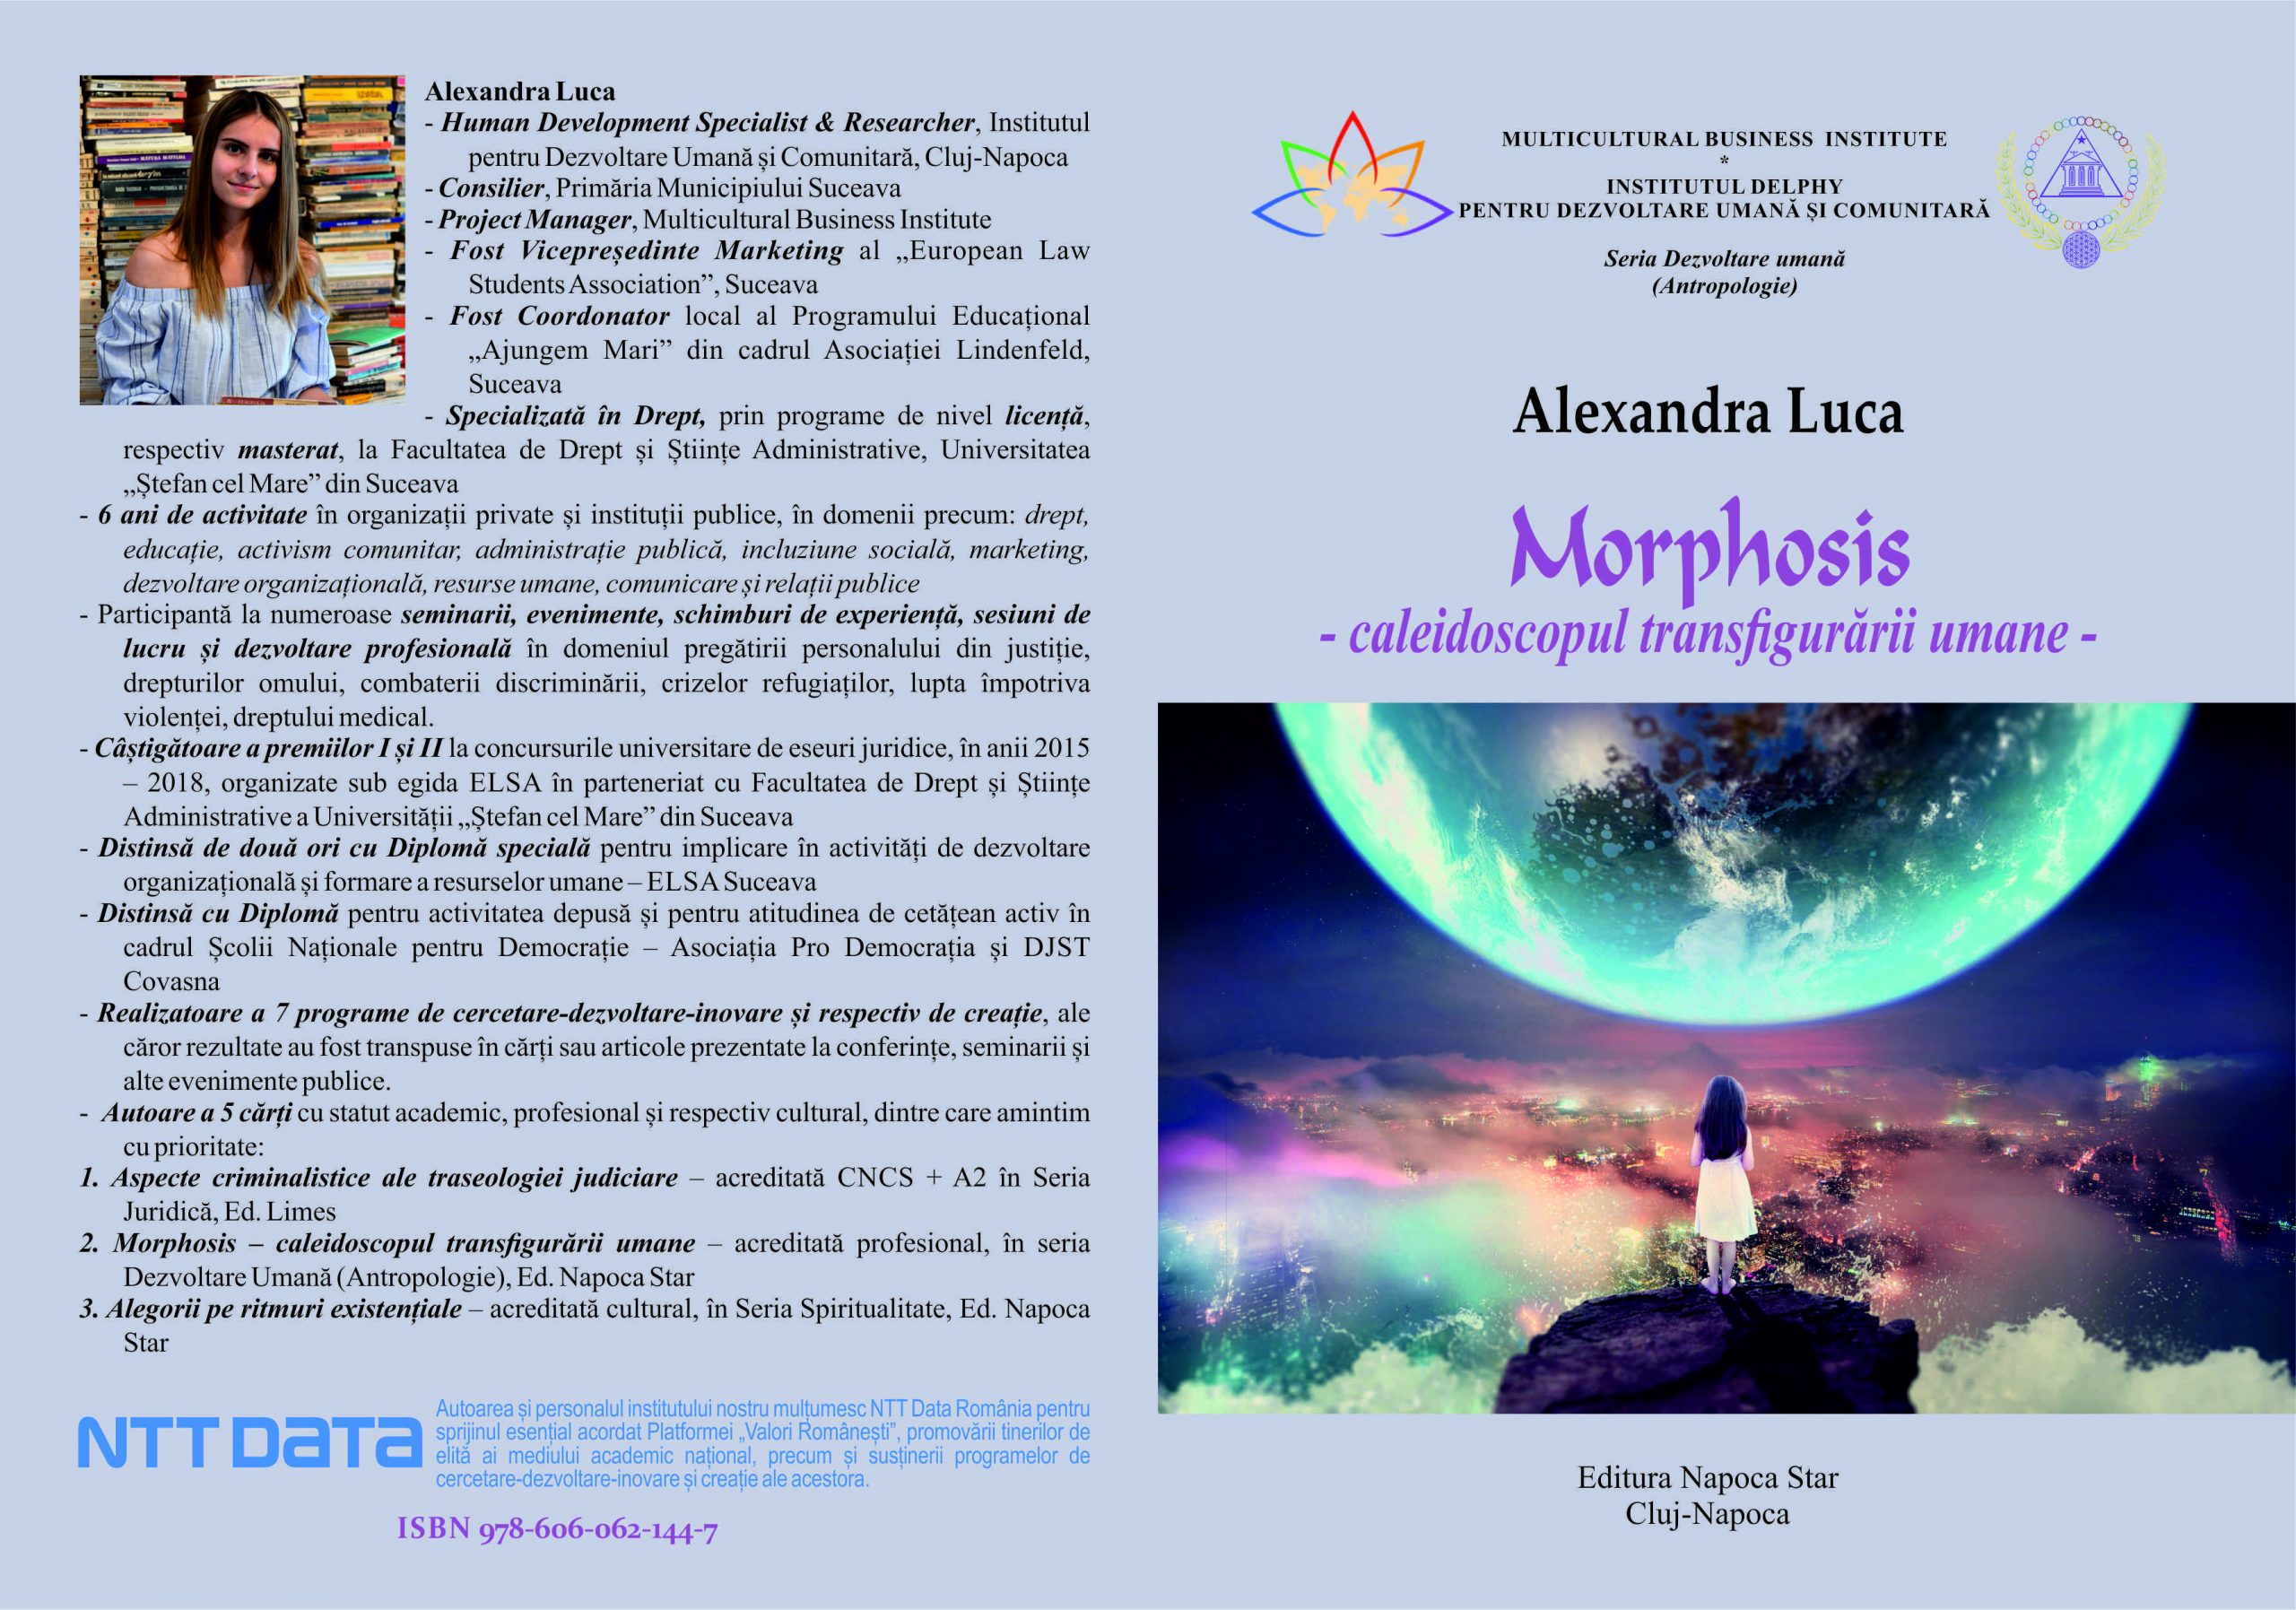 MORPHOSIS - Alexandra Luca